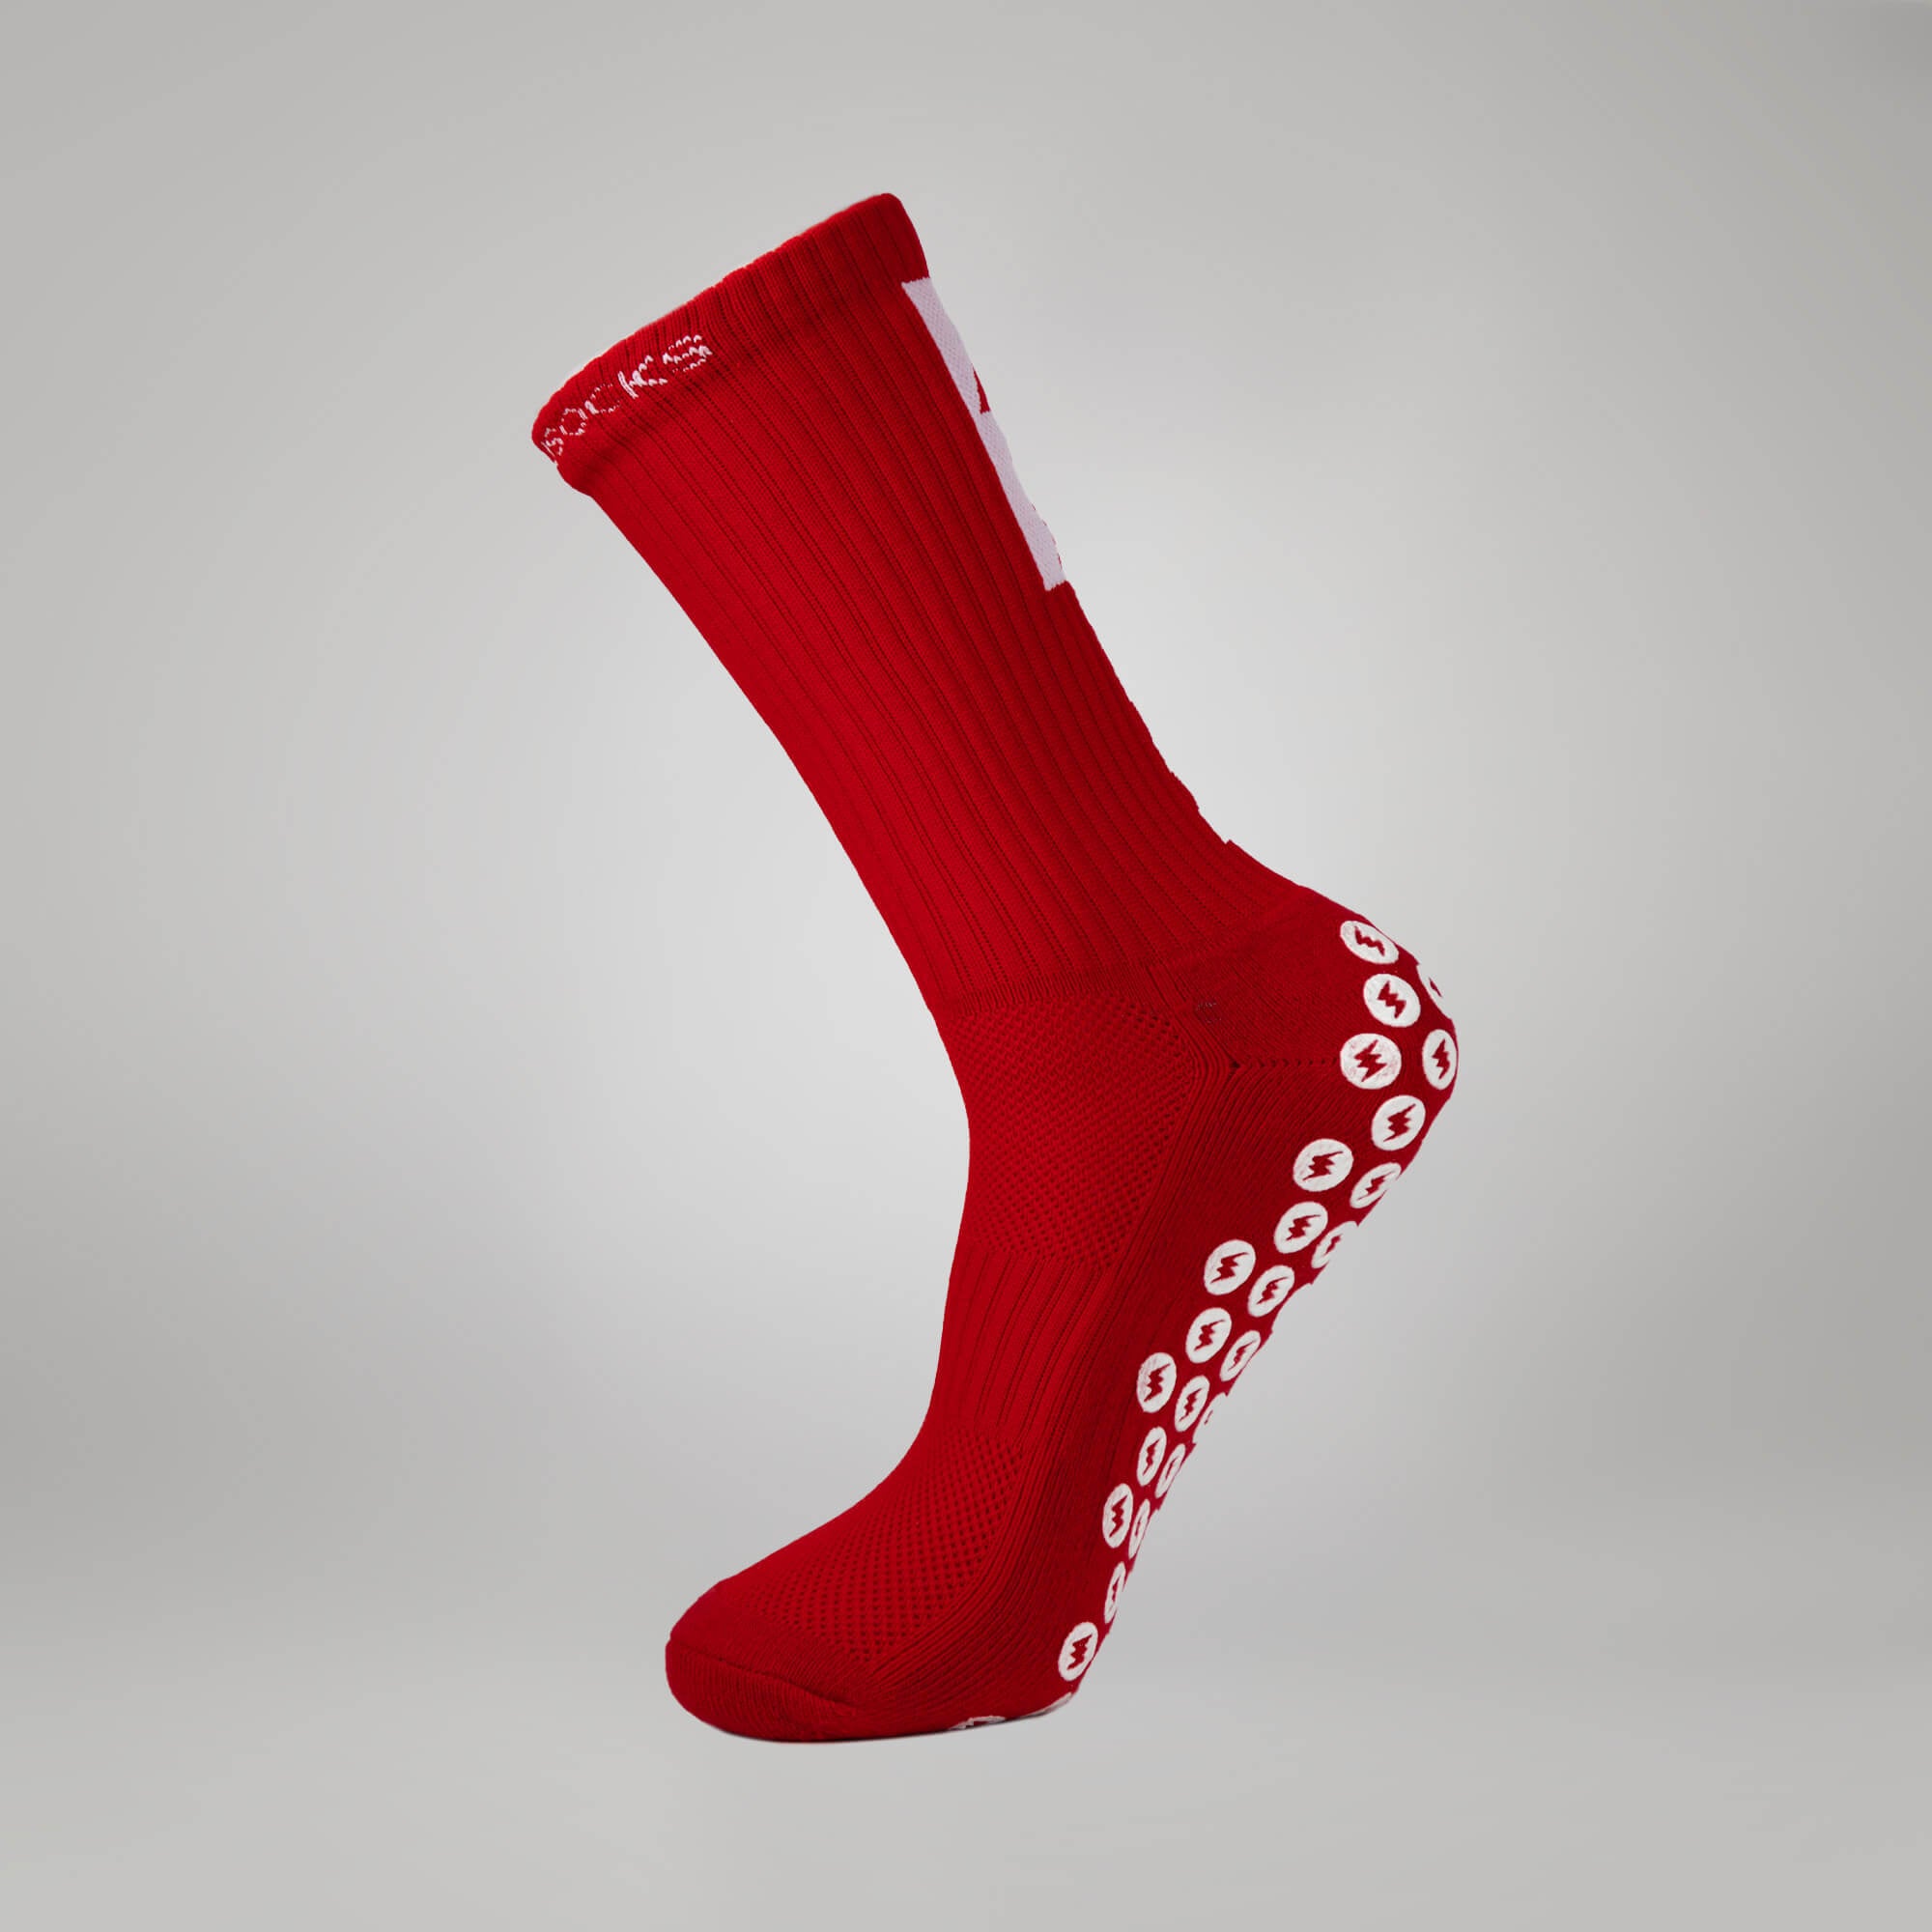 DOGU® - Special Edition Red Socks